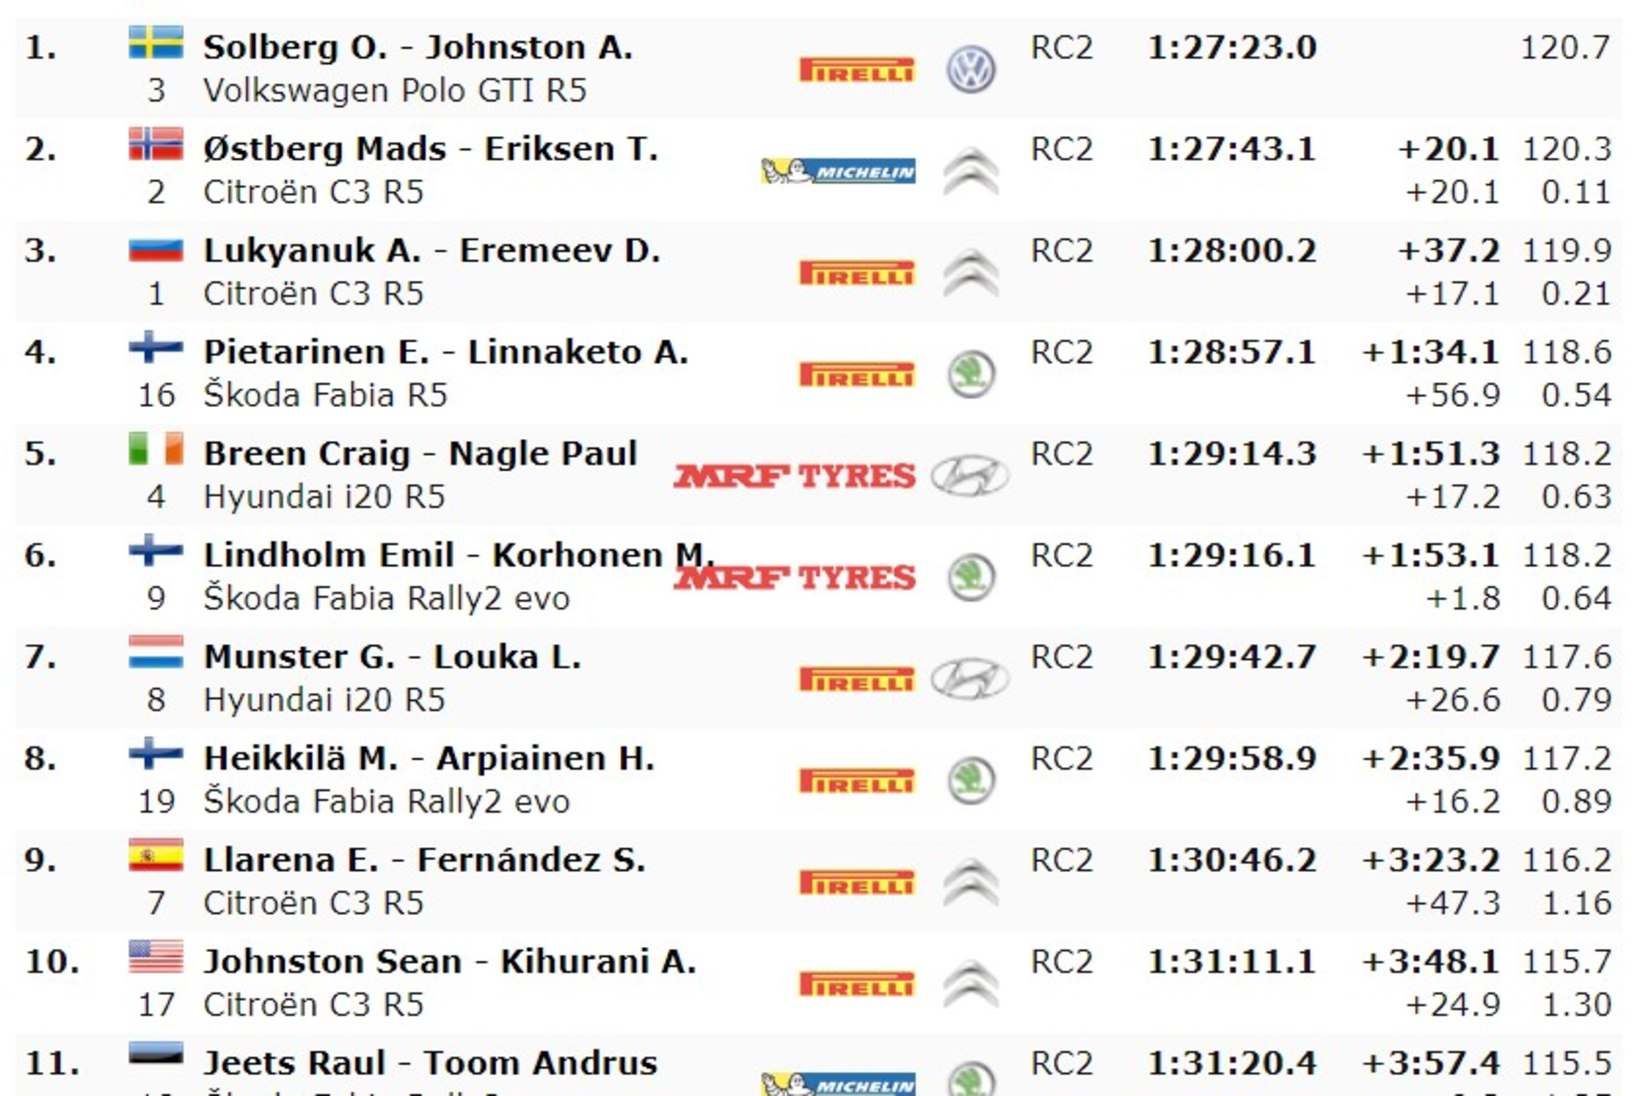 Solberg edestas Liepaja rallil Östbergi, Ken Torn tuli RC4-klassis võitjaks